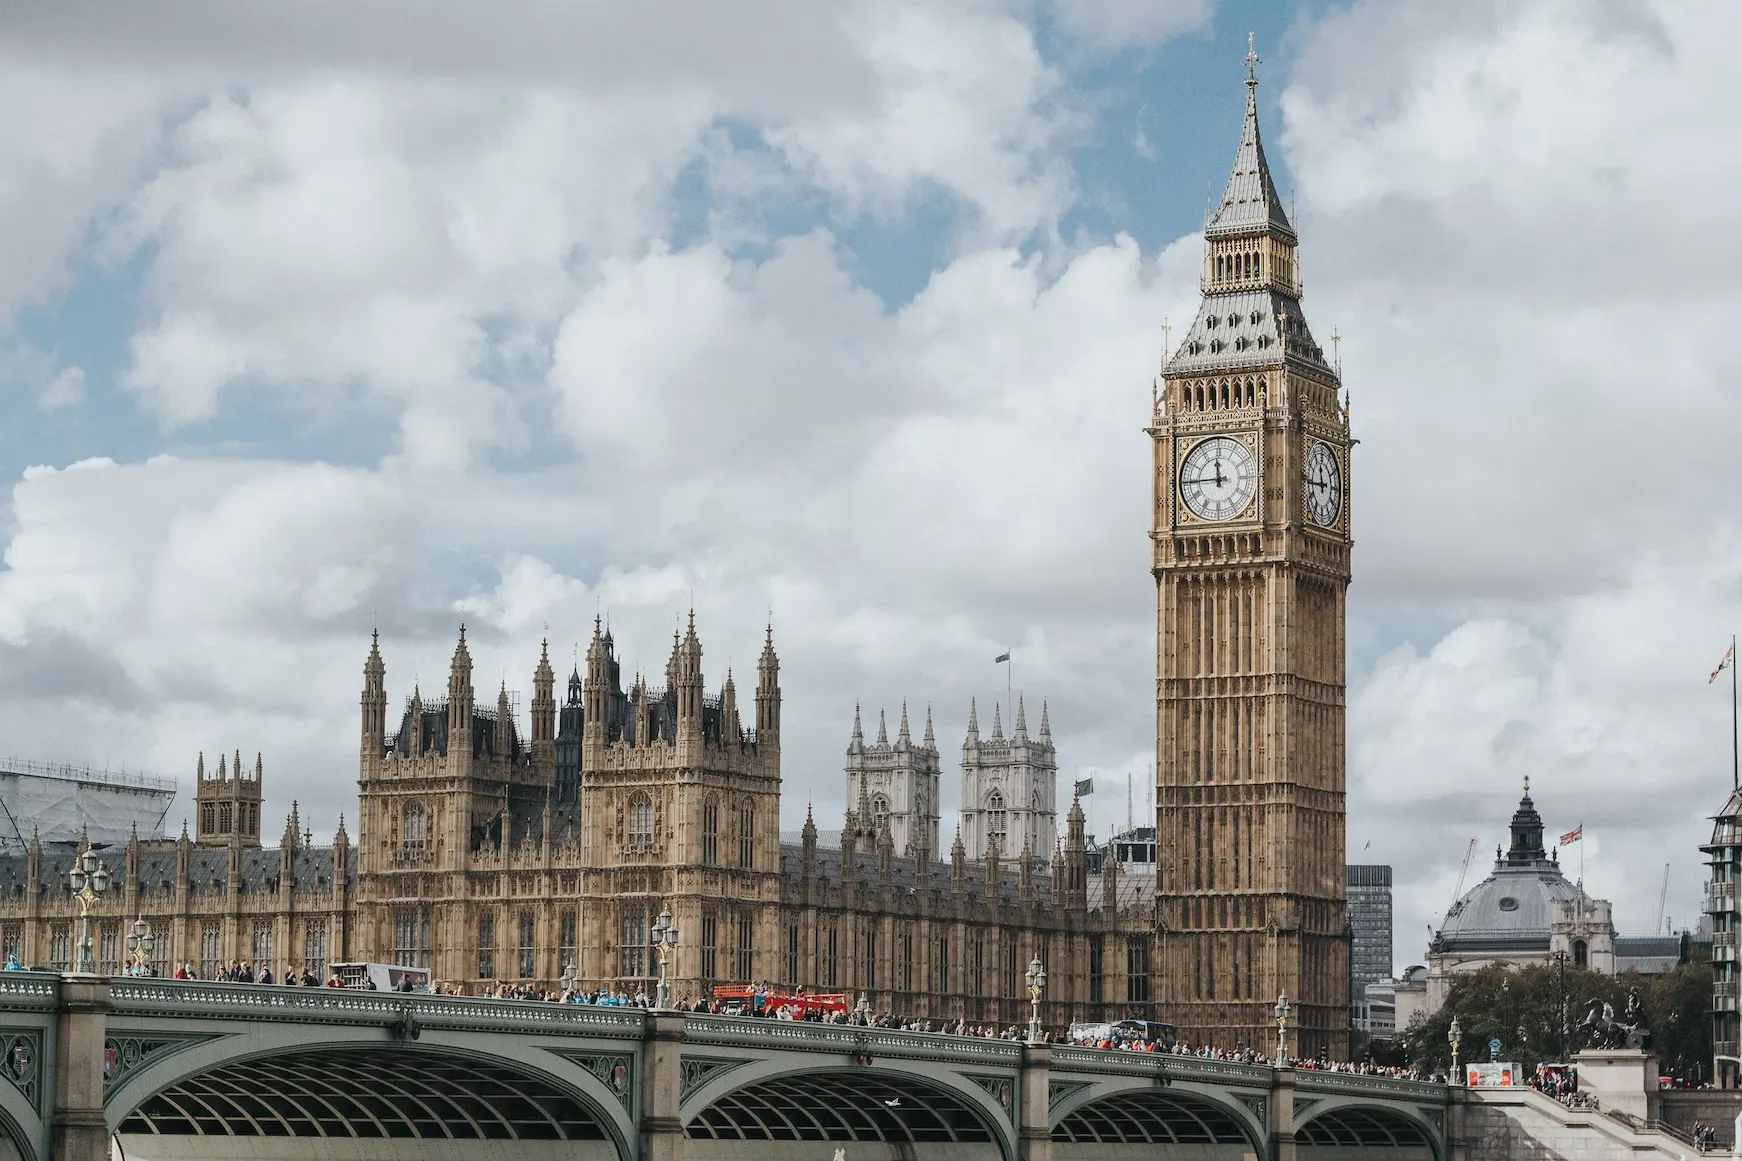 London's Big Ben. Source: Photo by Marcin Nowak/unsplash.com